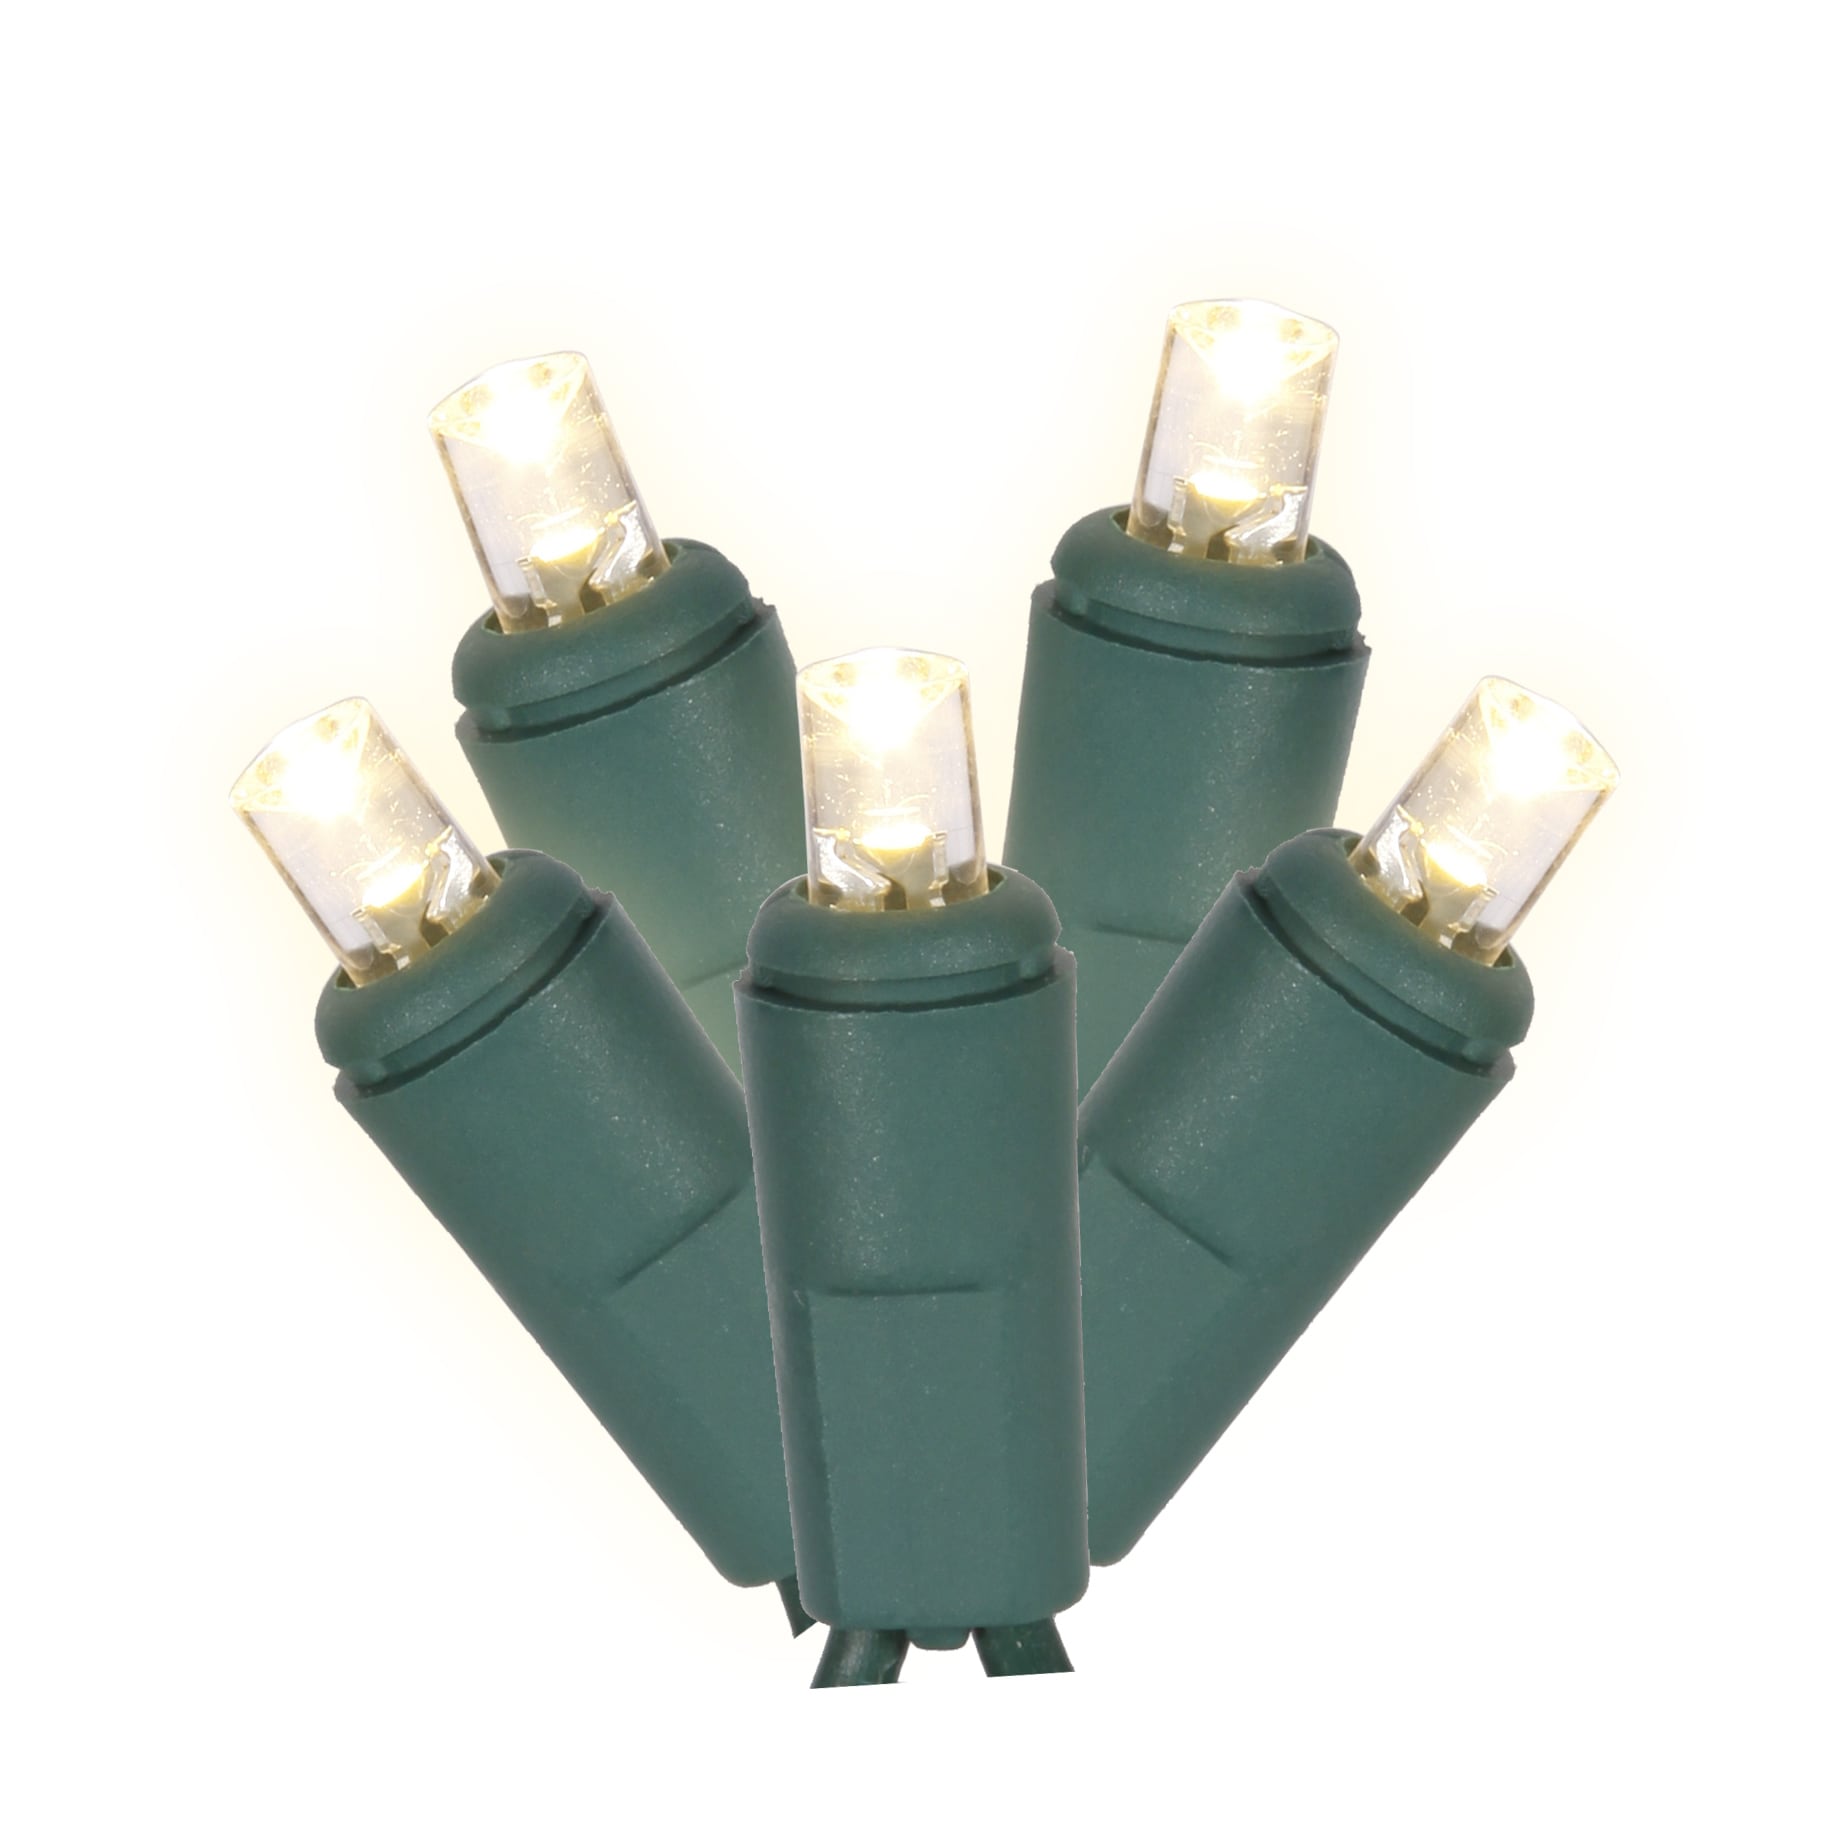 Commercial 100 Multi Color Mini Lights, Lamp Lock, Green Wire, 6